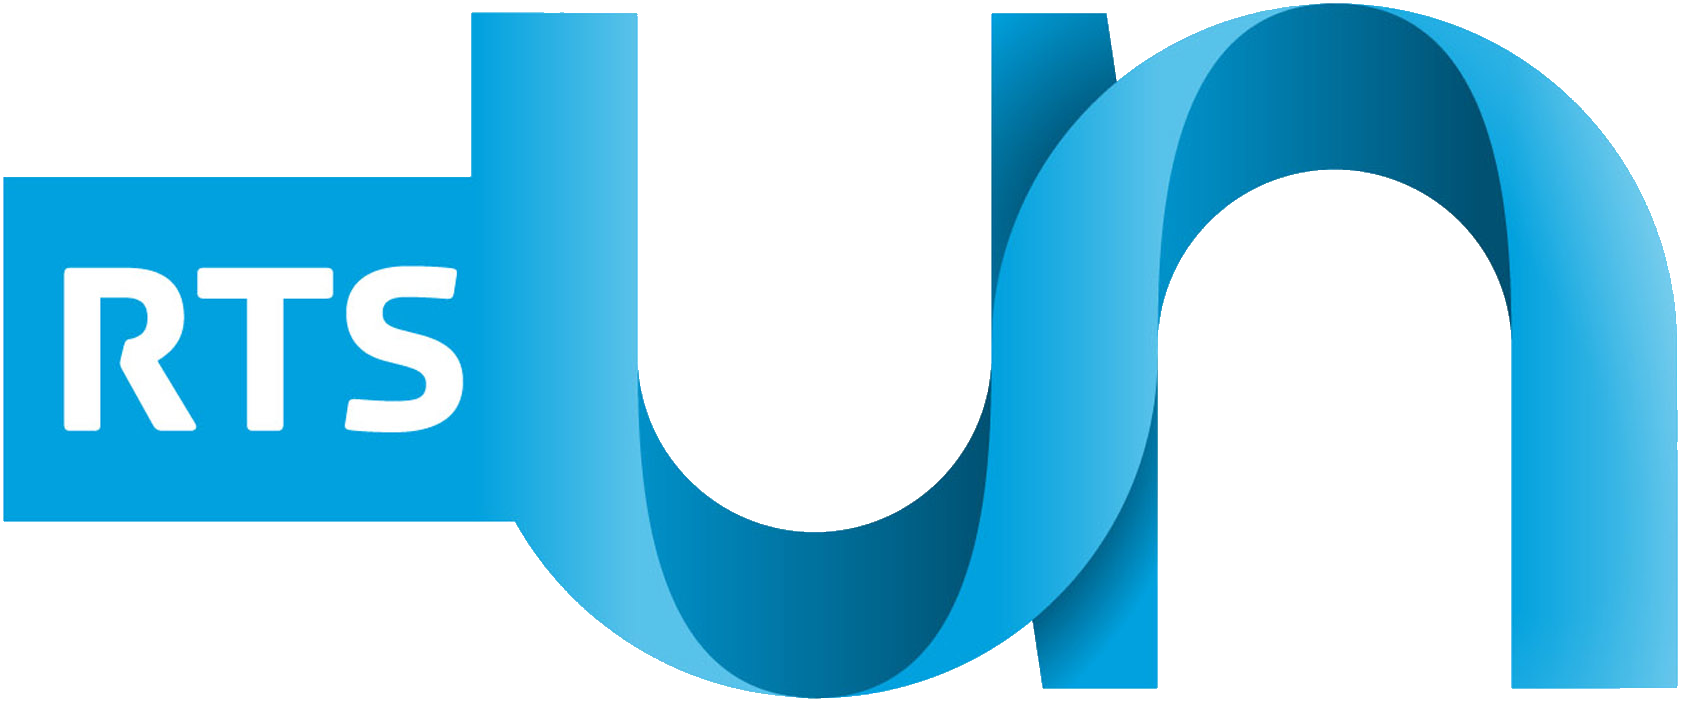 rts-un-logopedia-the-logo-and-branding-site